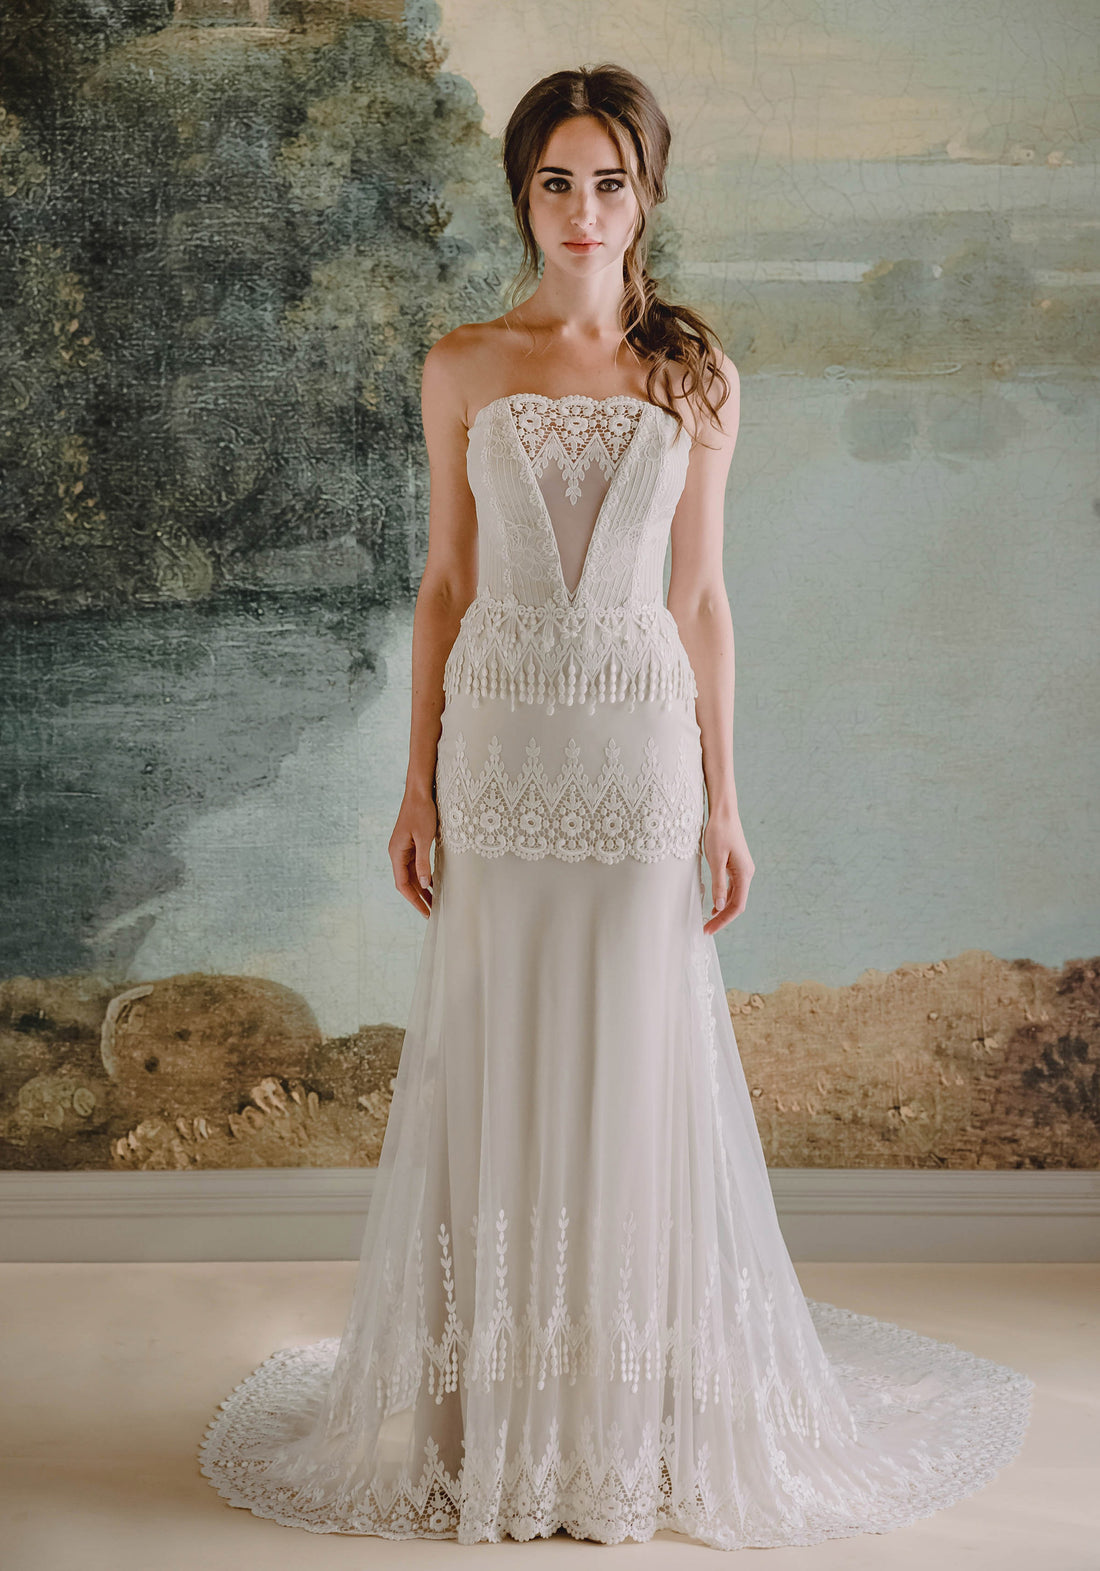 Timeless Wedding Gowns  Claire Pettibone Wedding Dresses